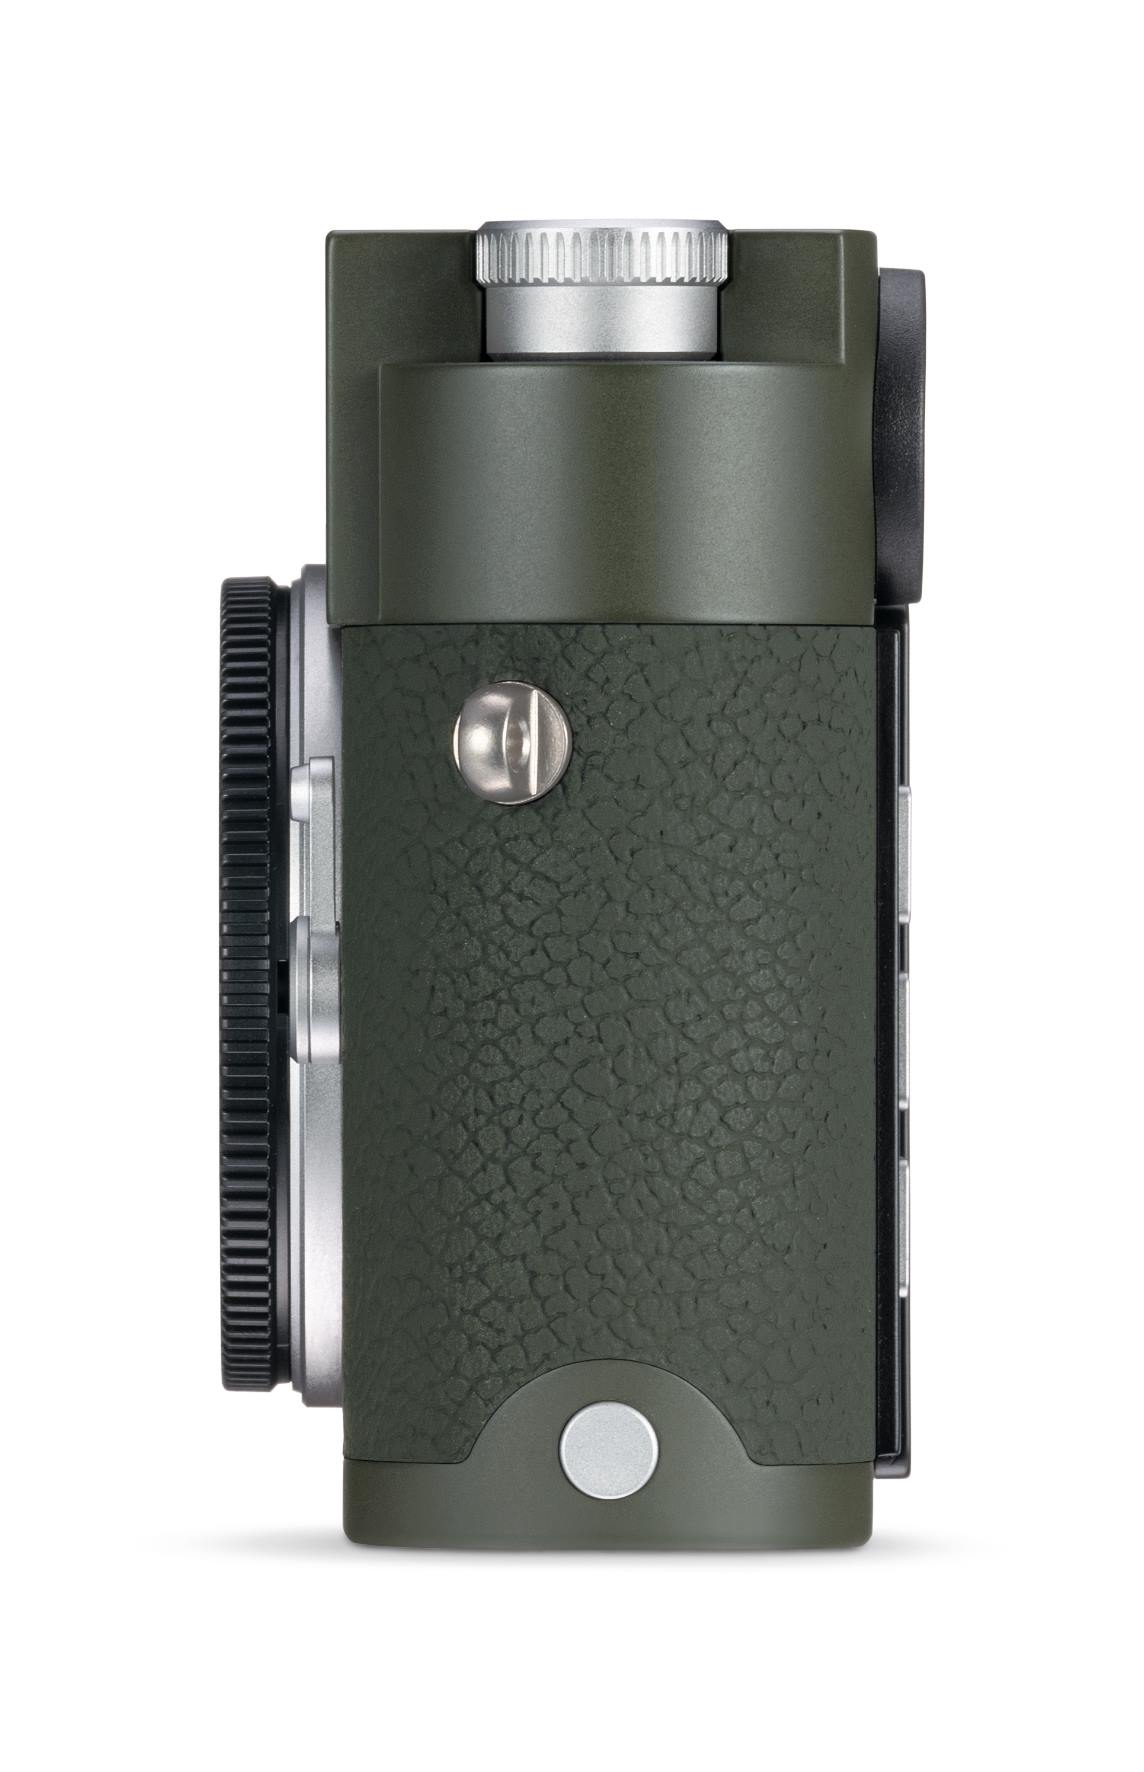 Đang tải Leica-M10-P-Safari-limited-edition-camera6.jpg…